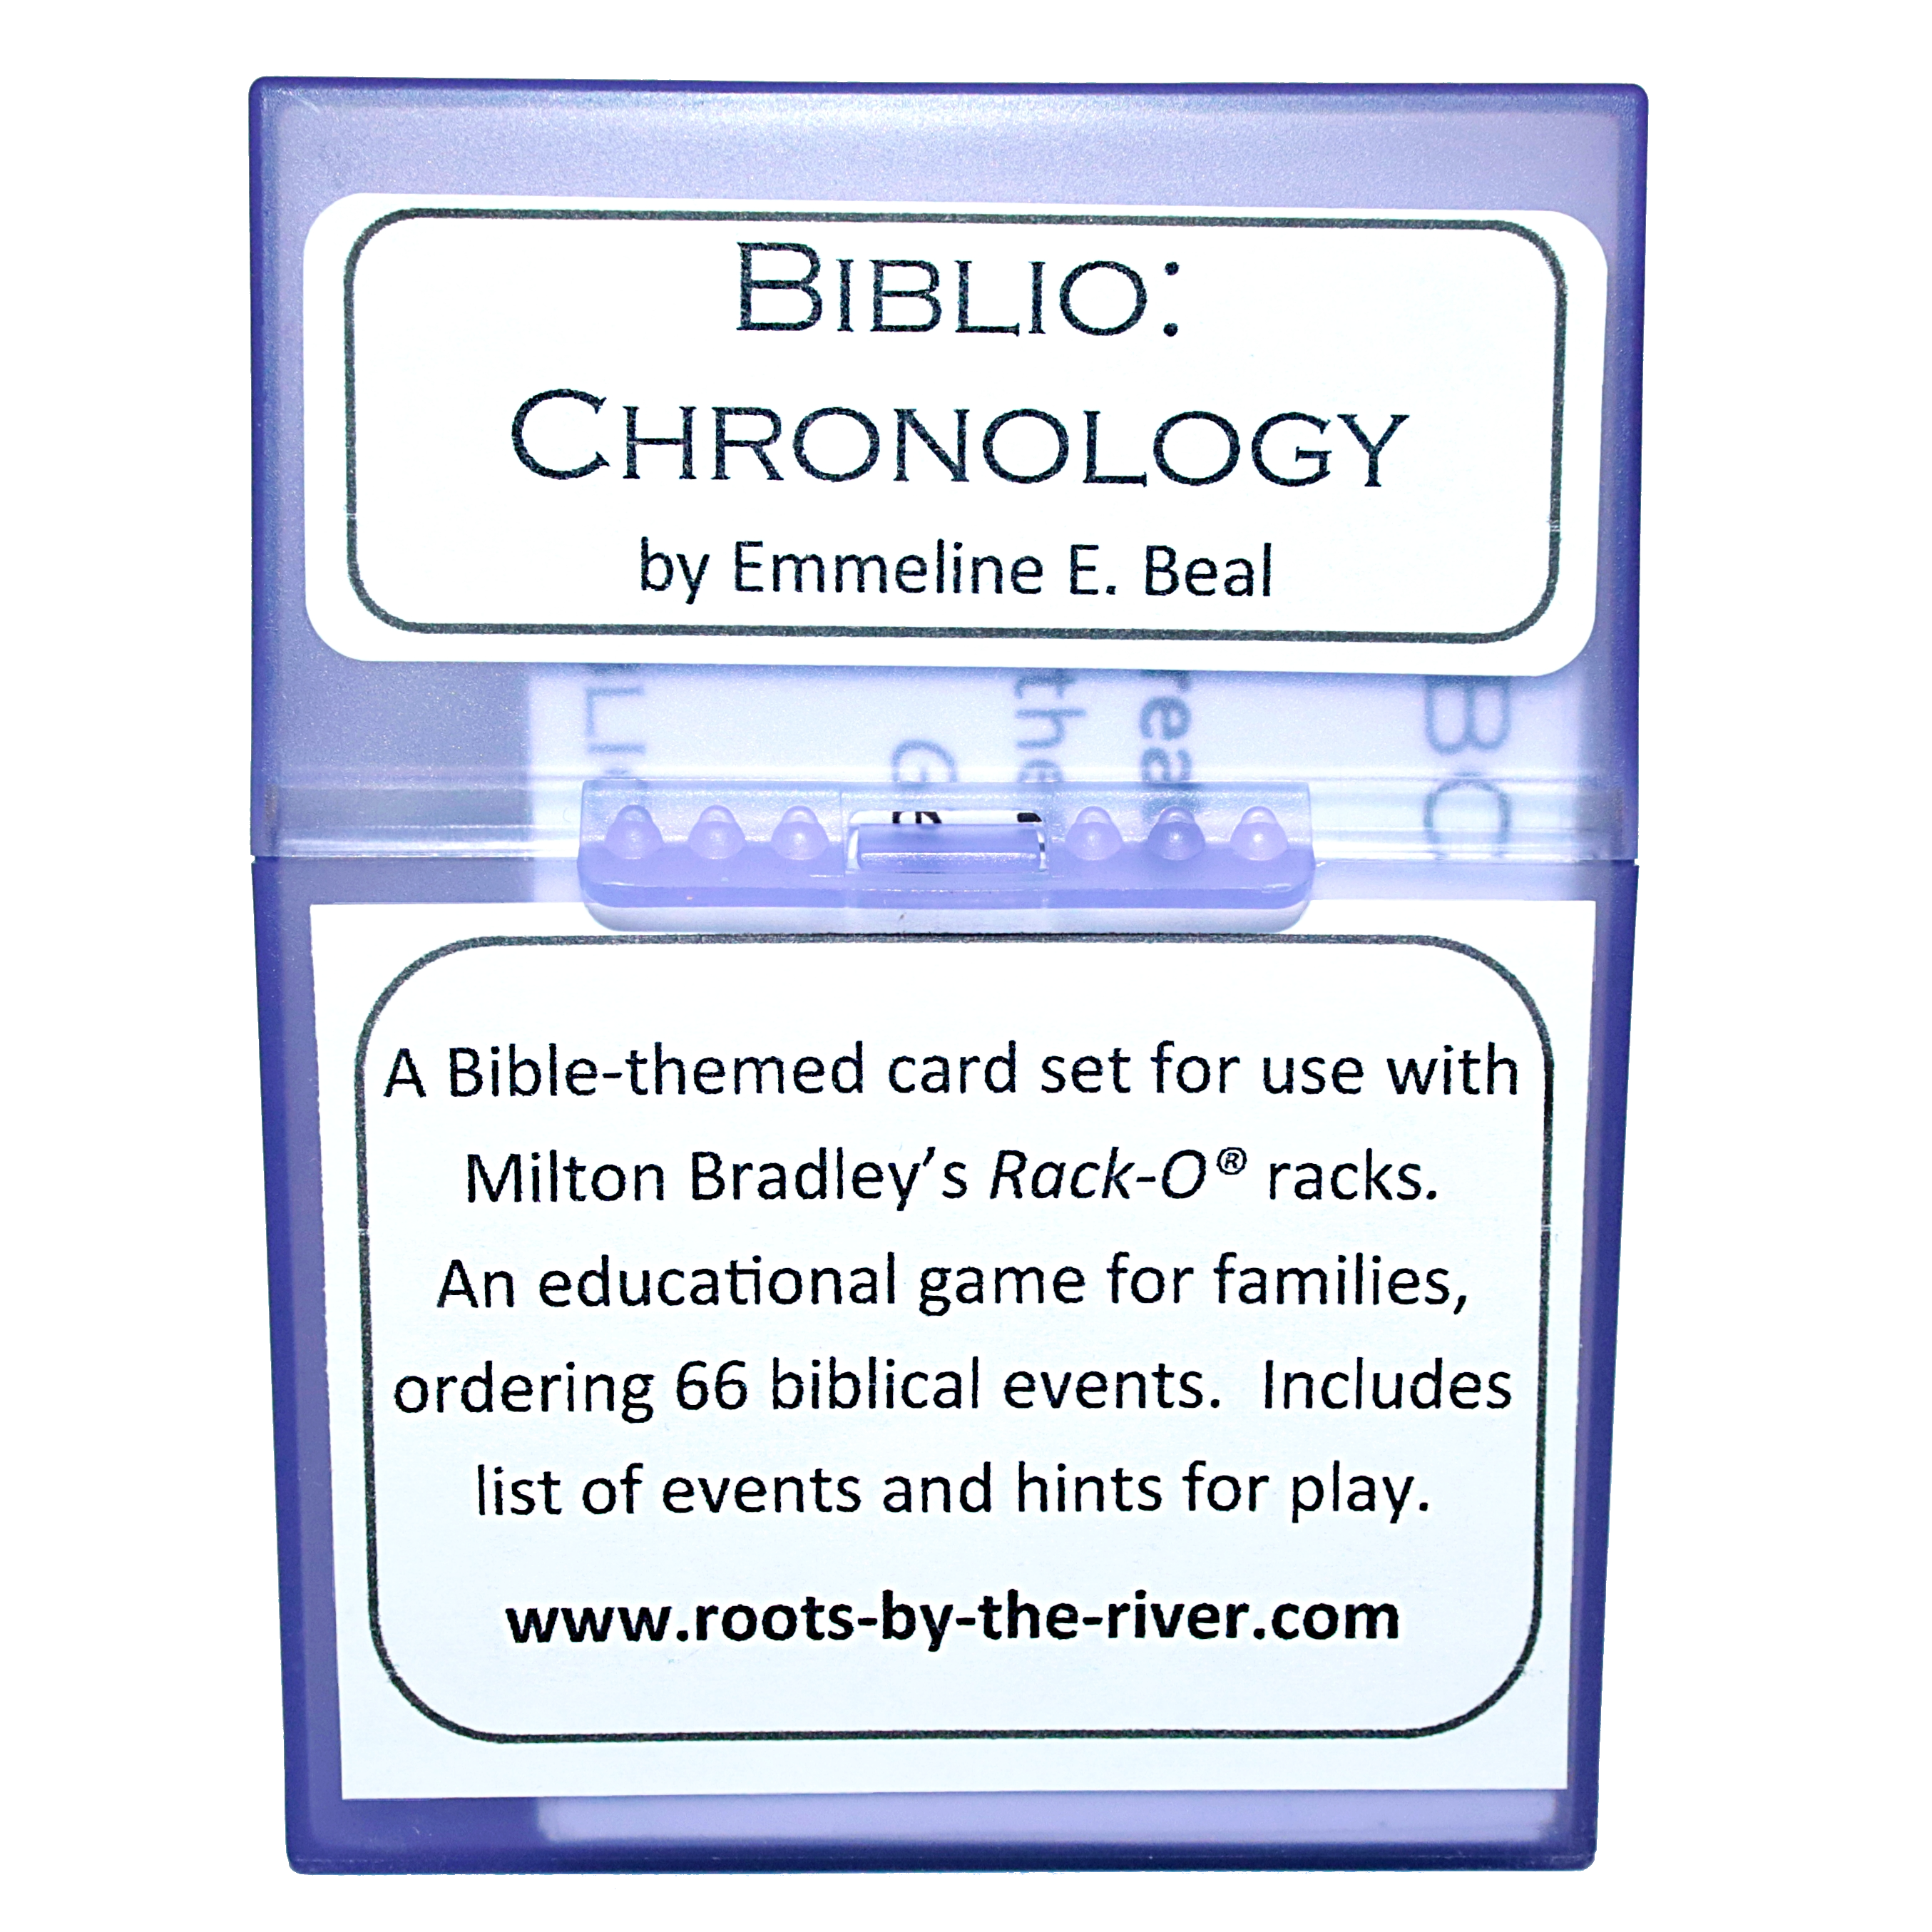 Biblio: Chronology